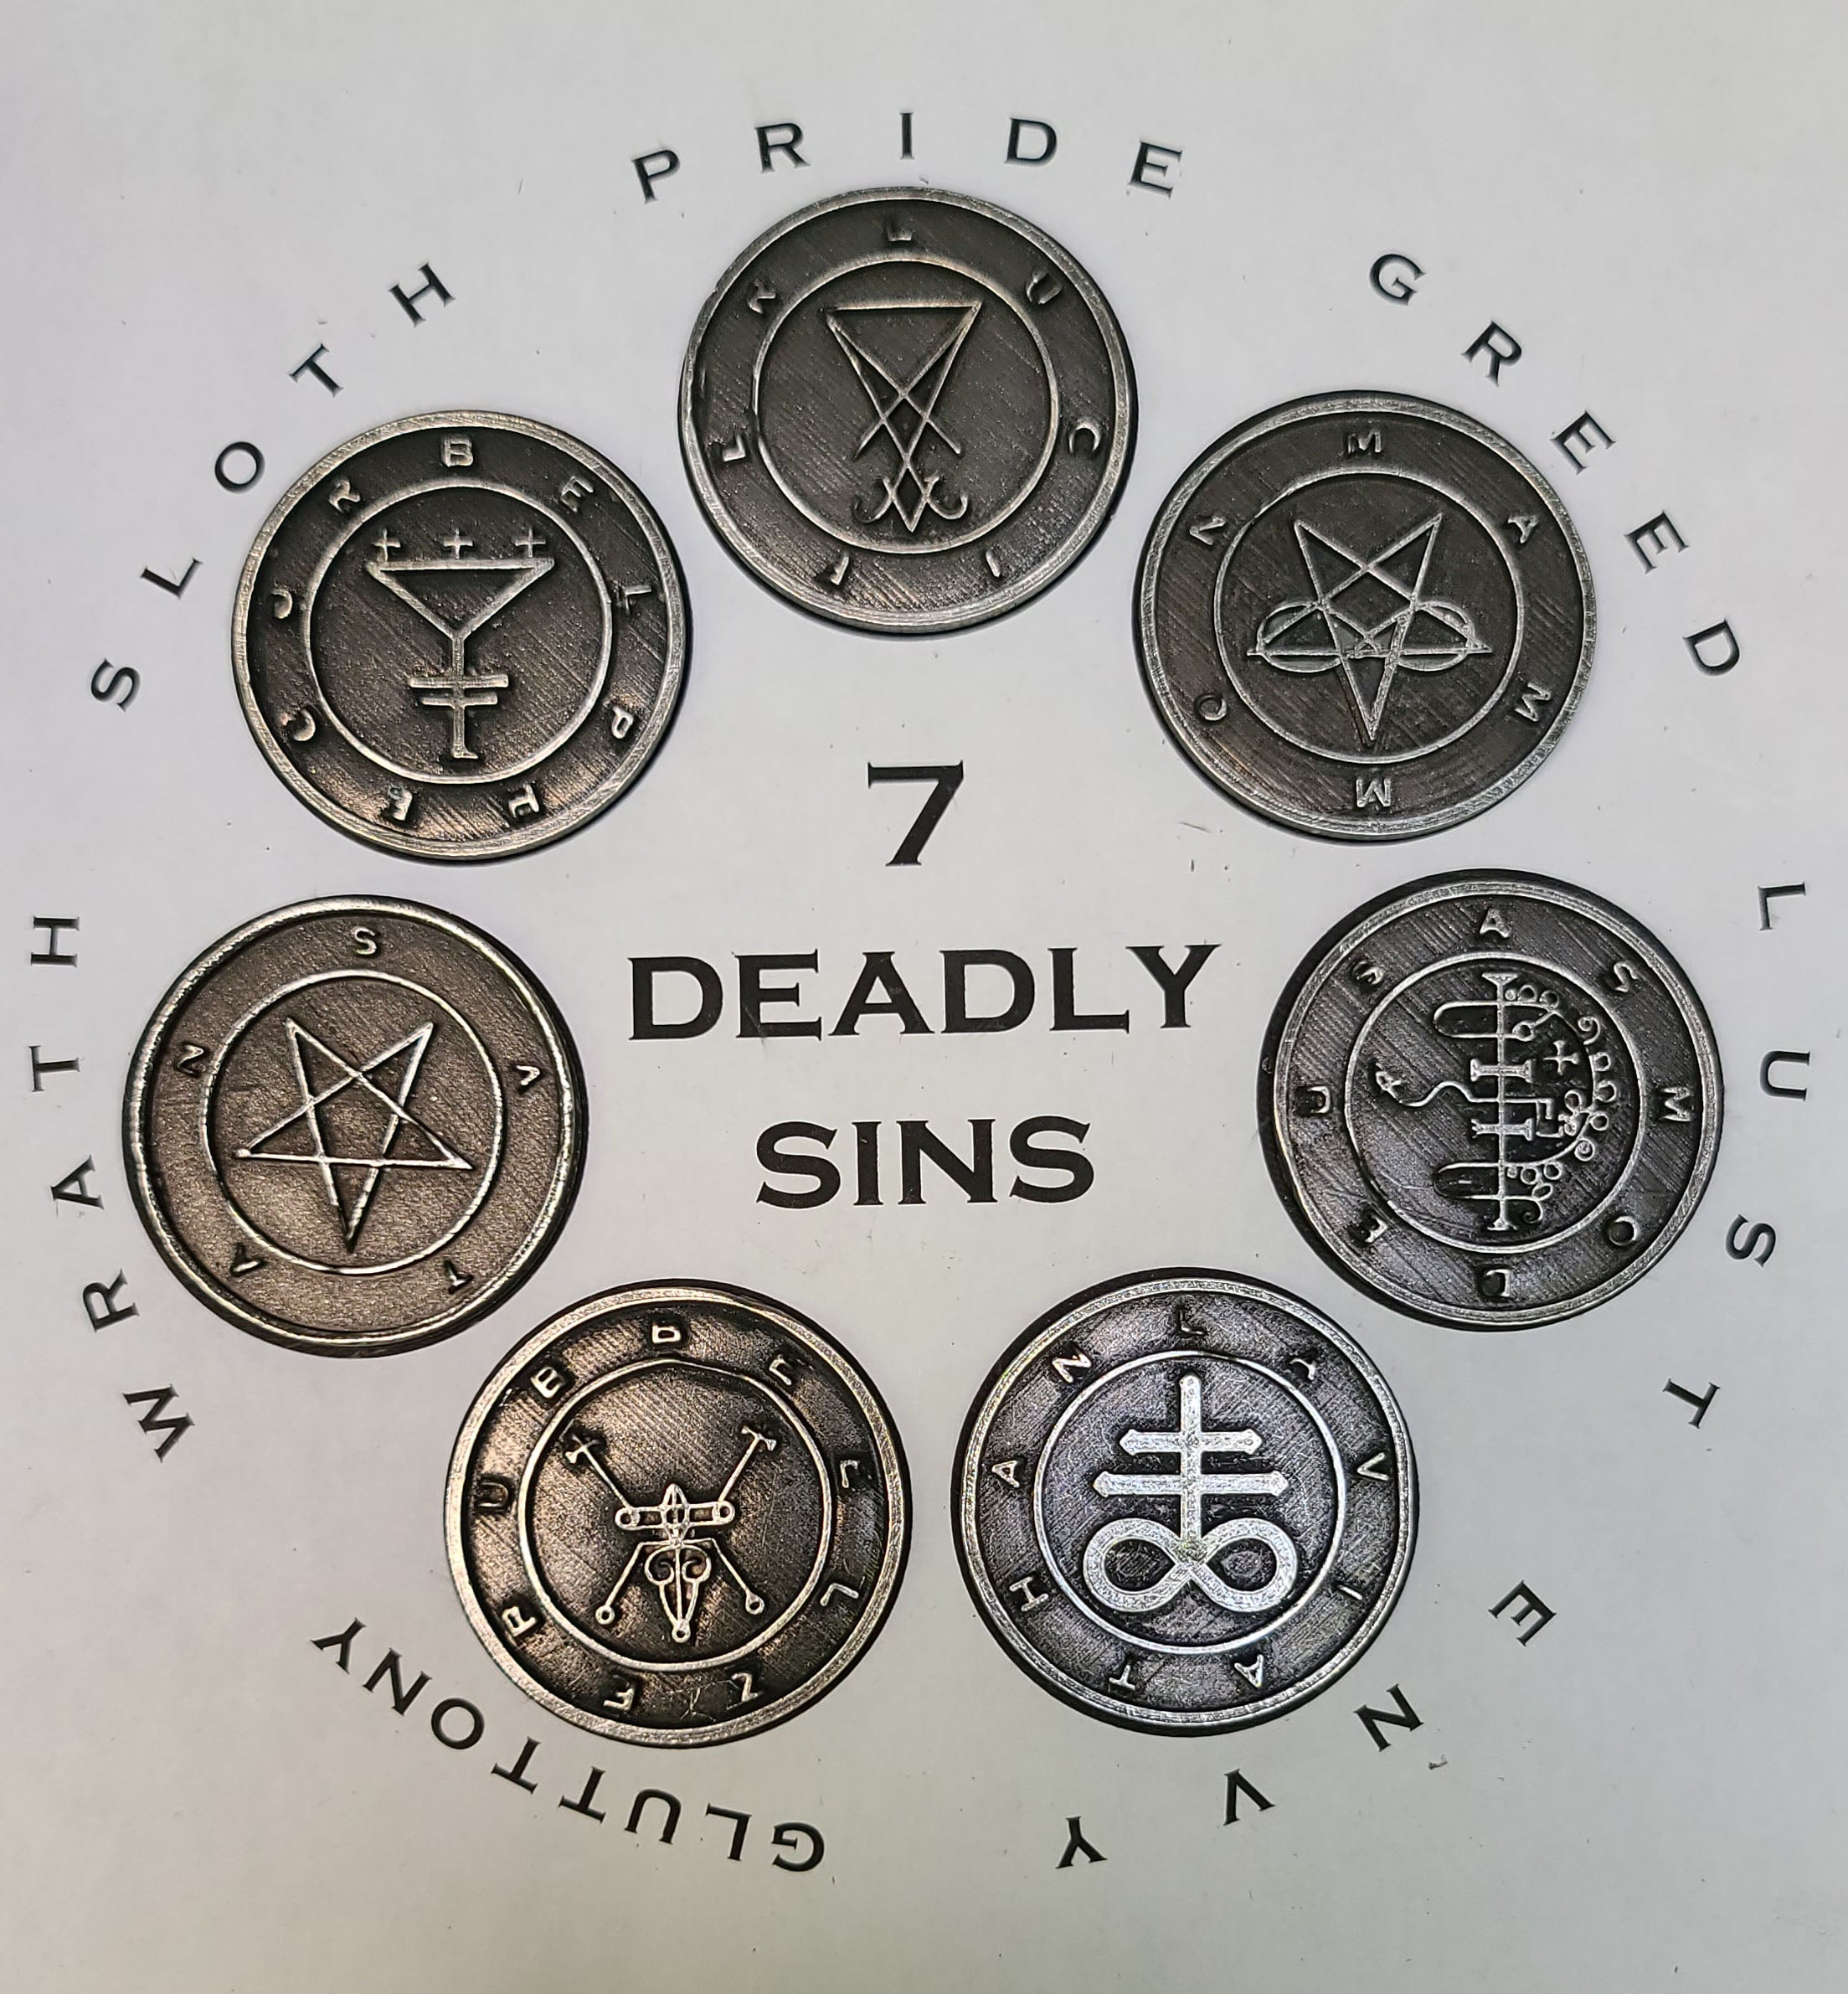 seven deadly sins symbols